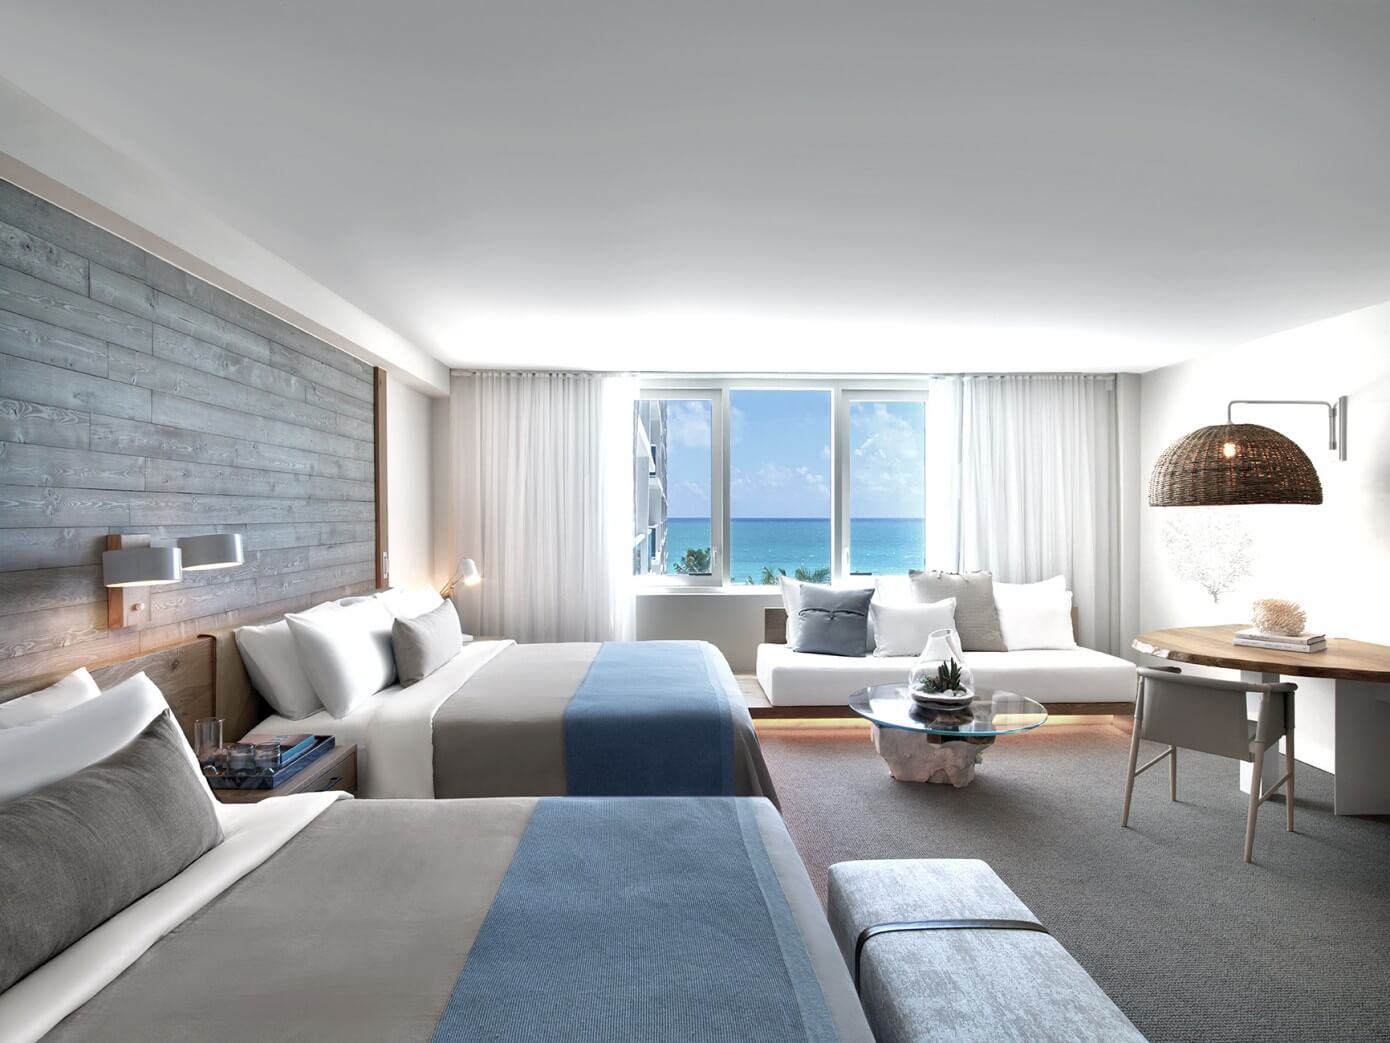 1 Hotel South Beach by Meyer Davis Studio